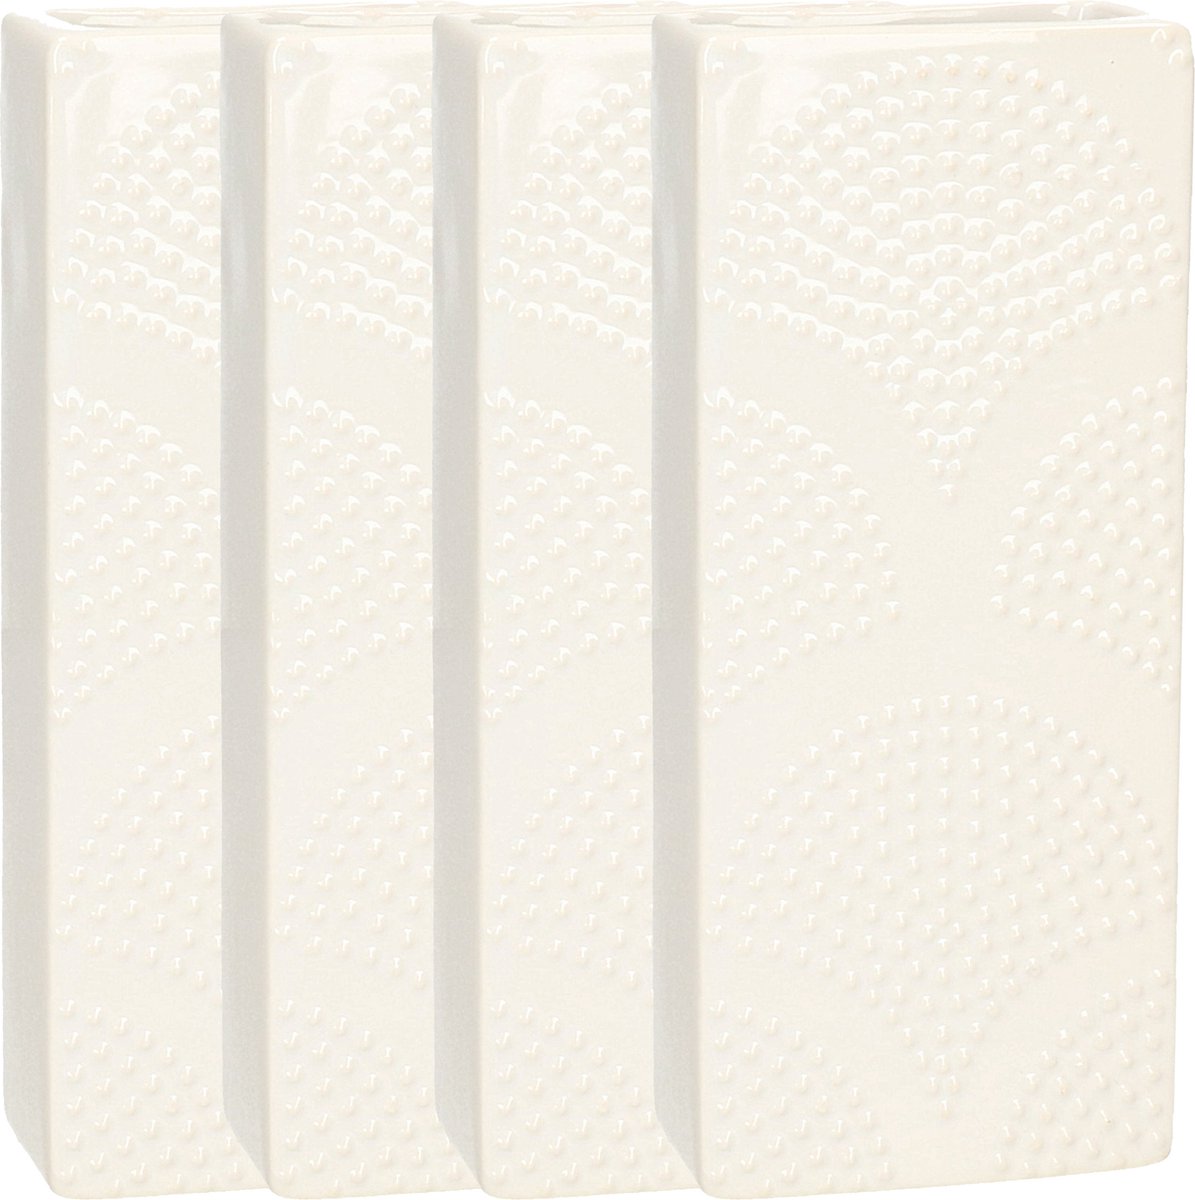 Gerimport Waterverdamper - 5x - ivoor wit - keramiek - 400 ml - radiatorbak luchtbevochtiger - 7,4 x 17,7 cm